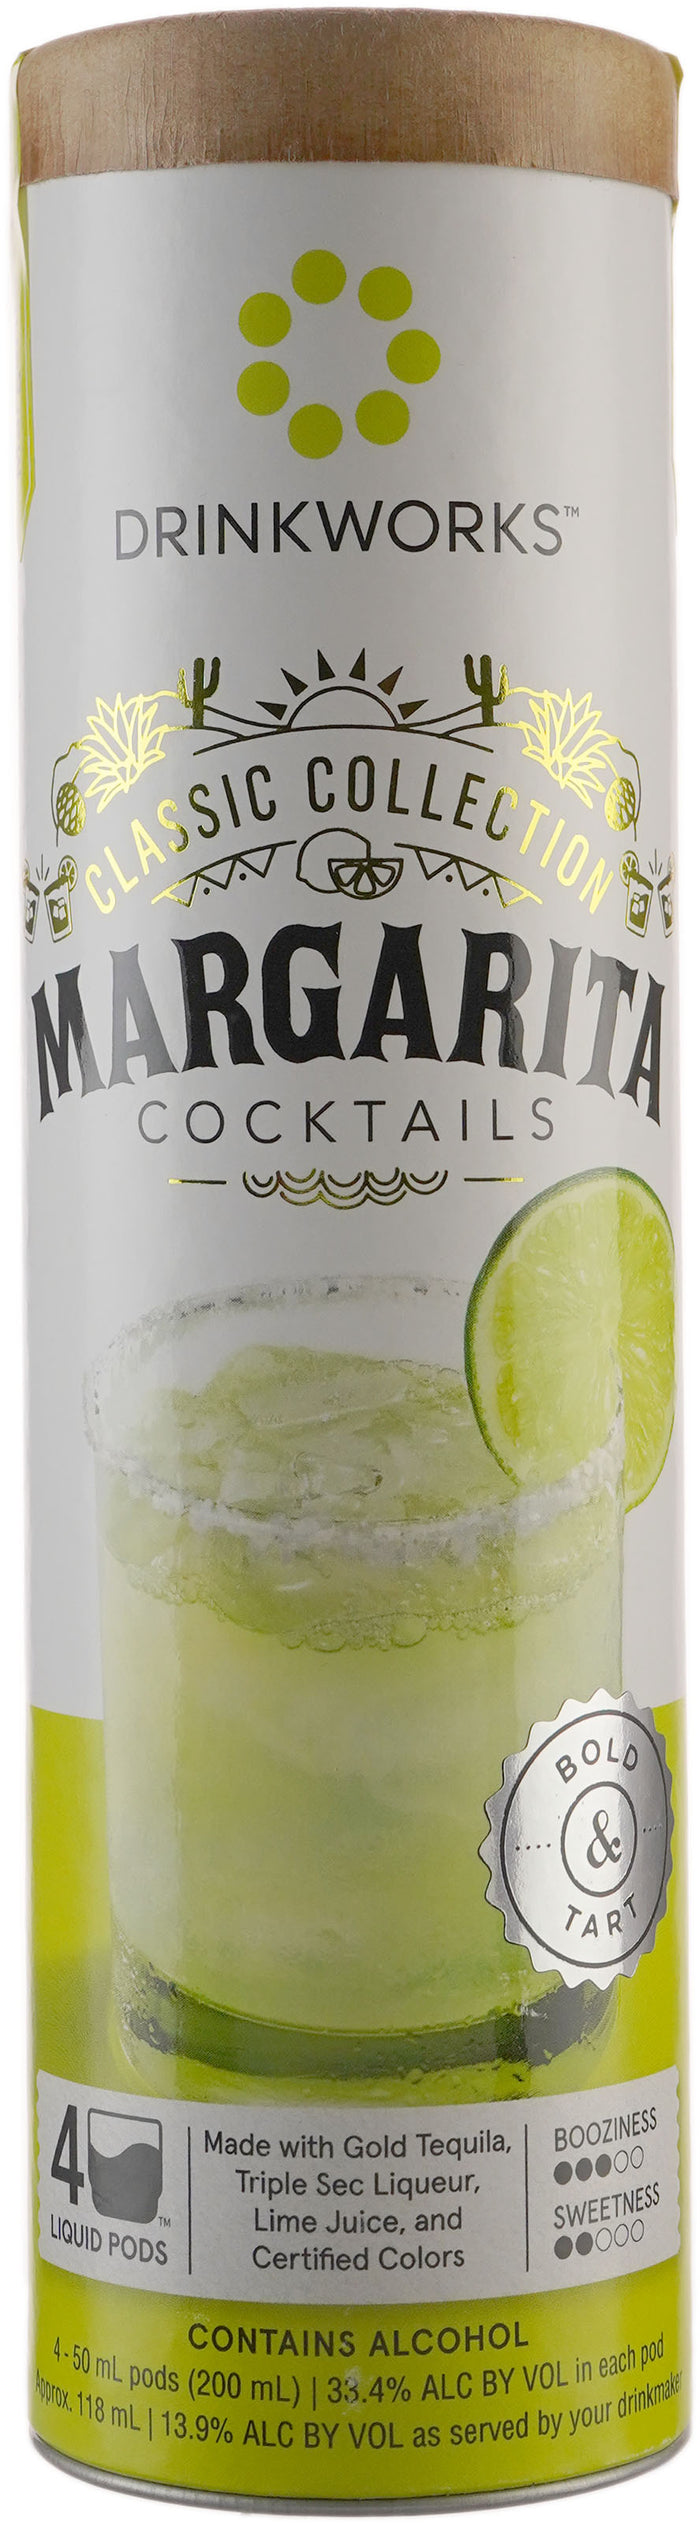 Drinkworks Margarita Cocktail